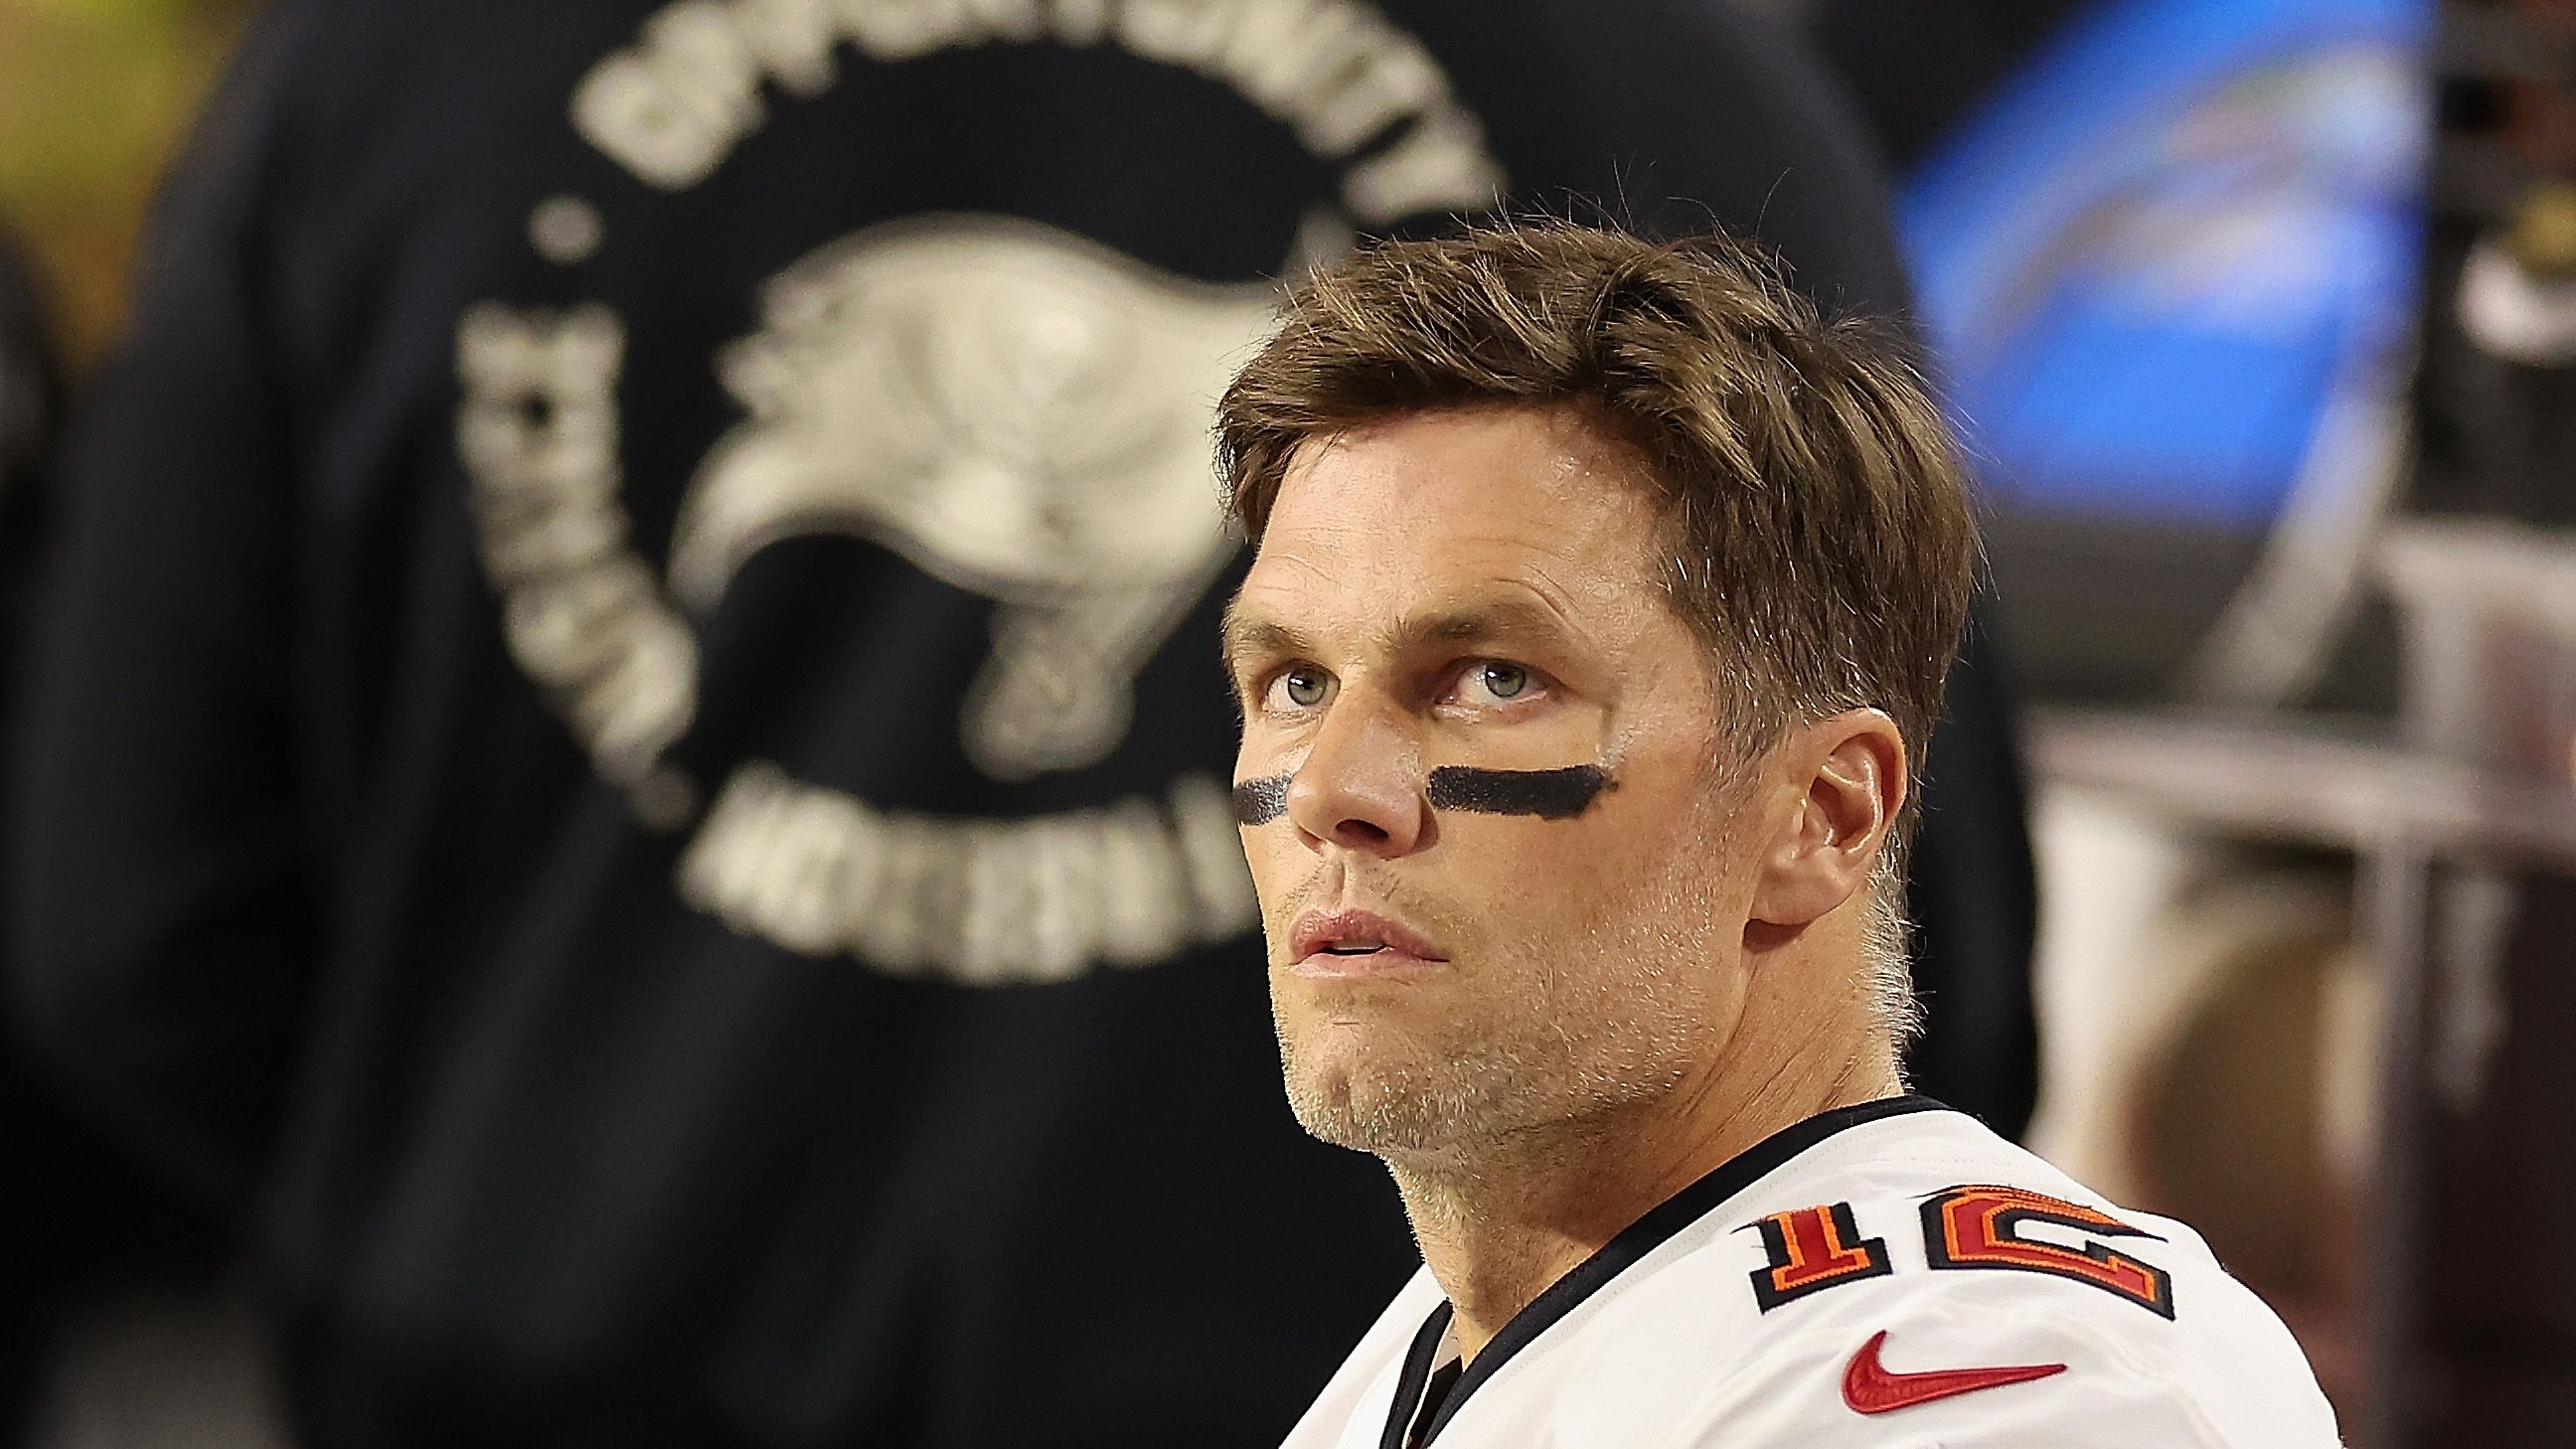 American football superstar Tom Brady announces retirement, this